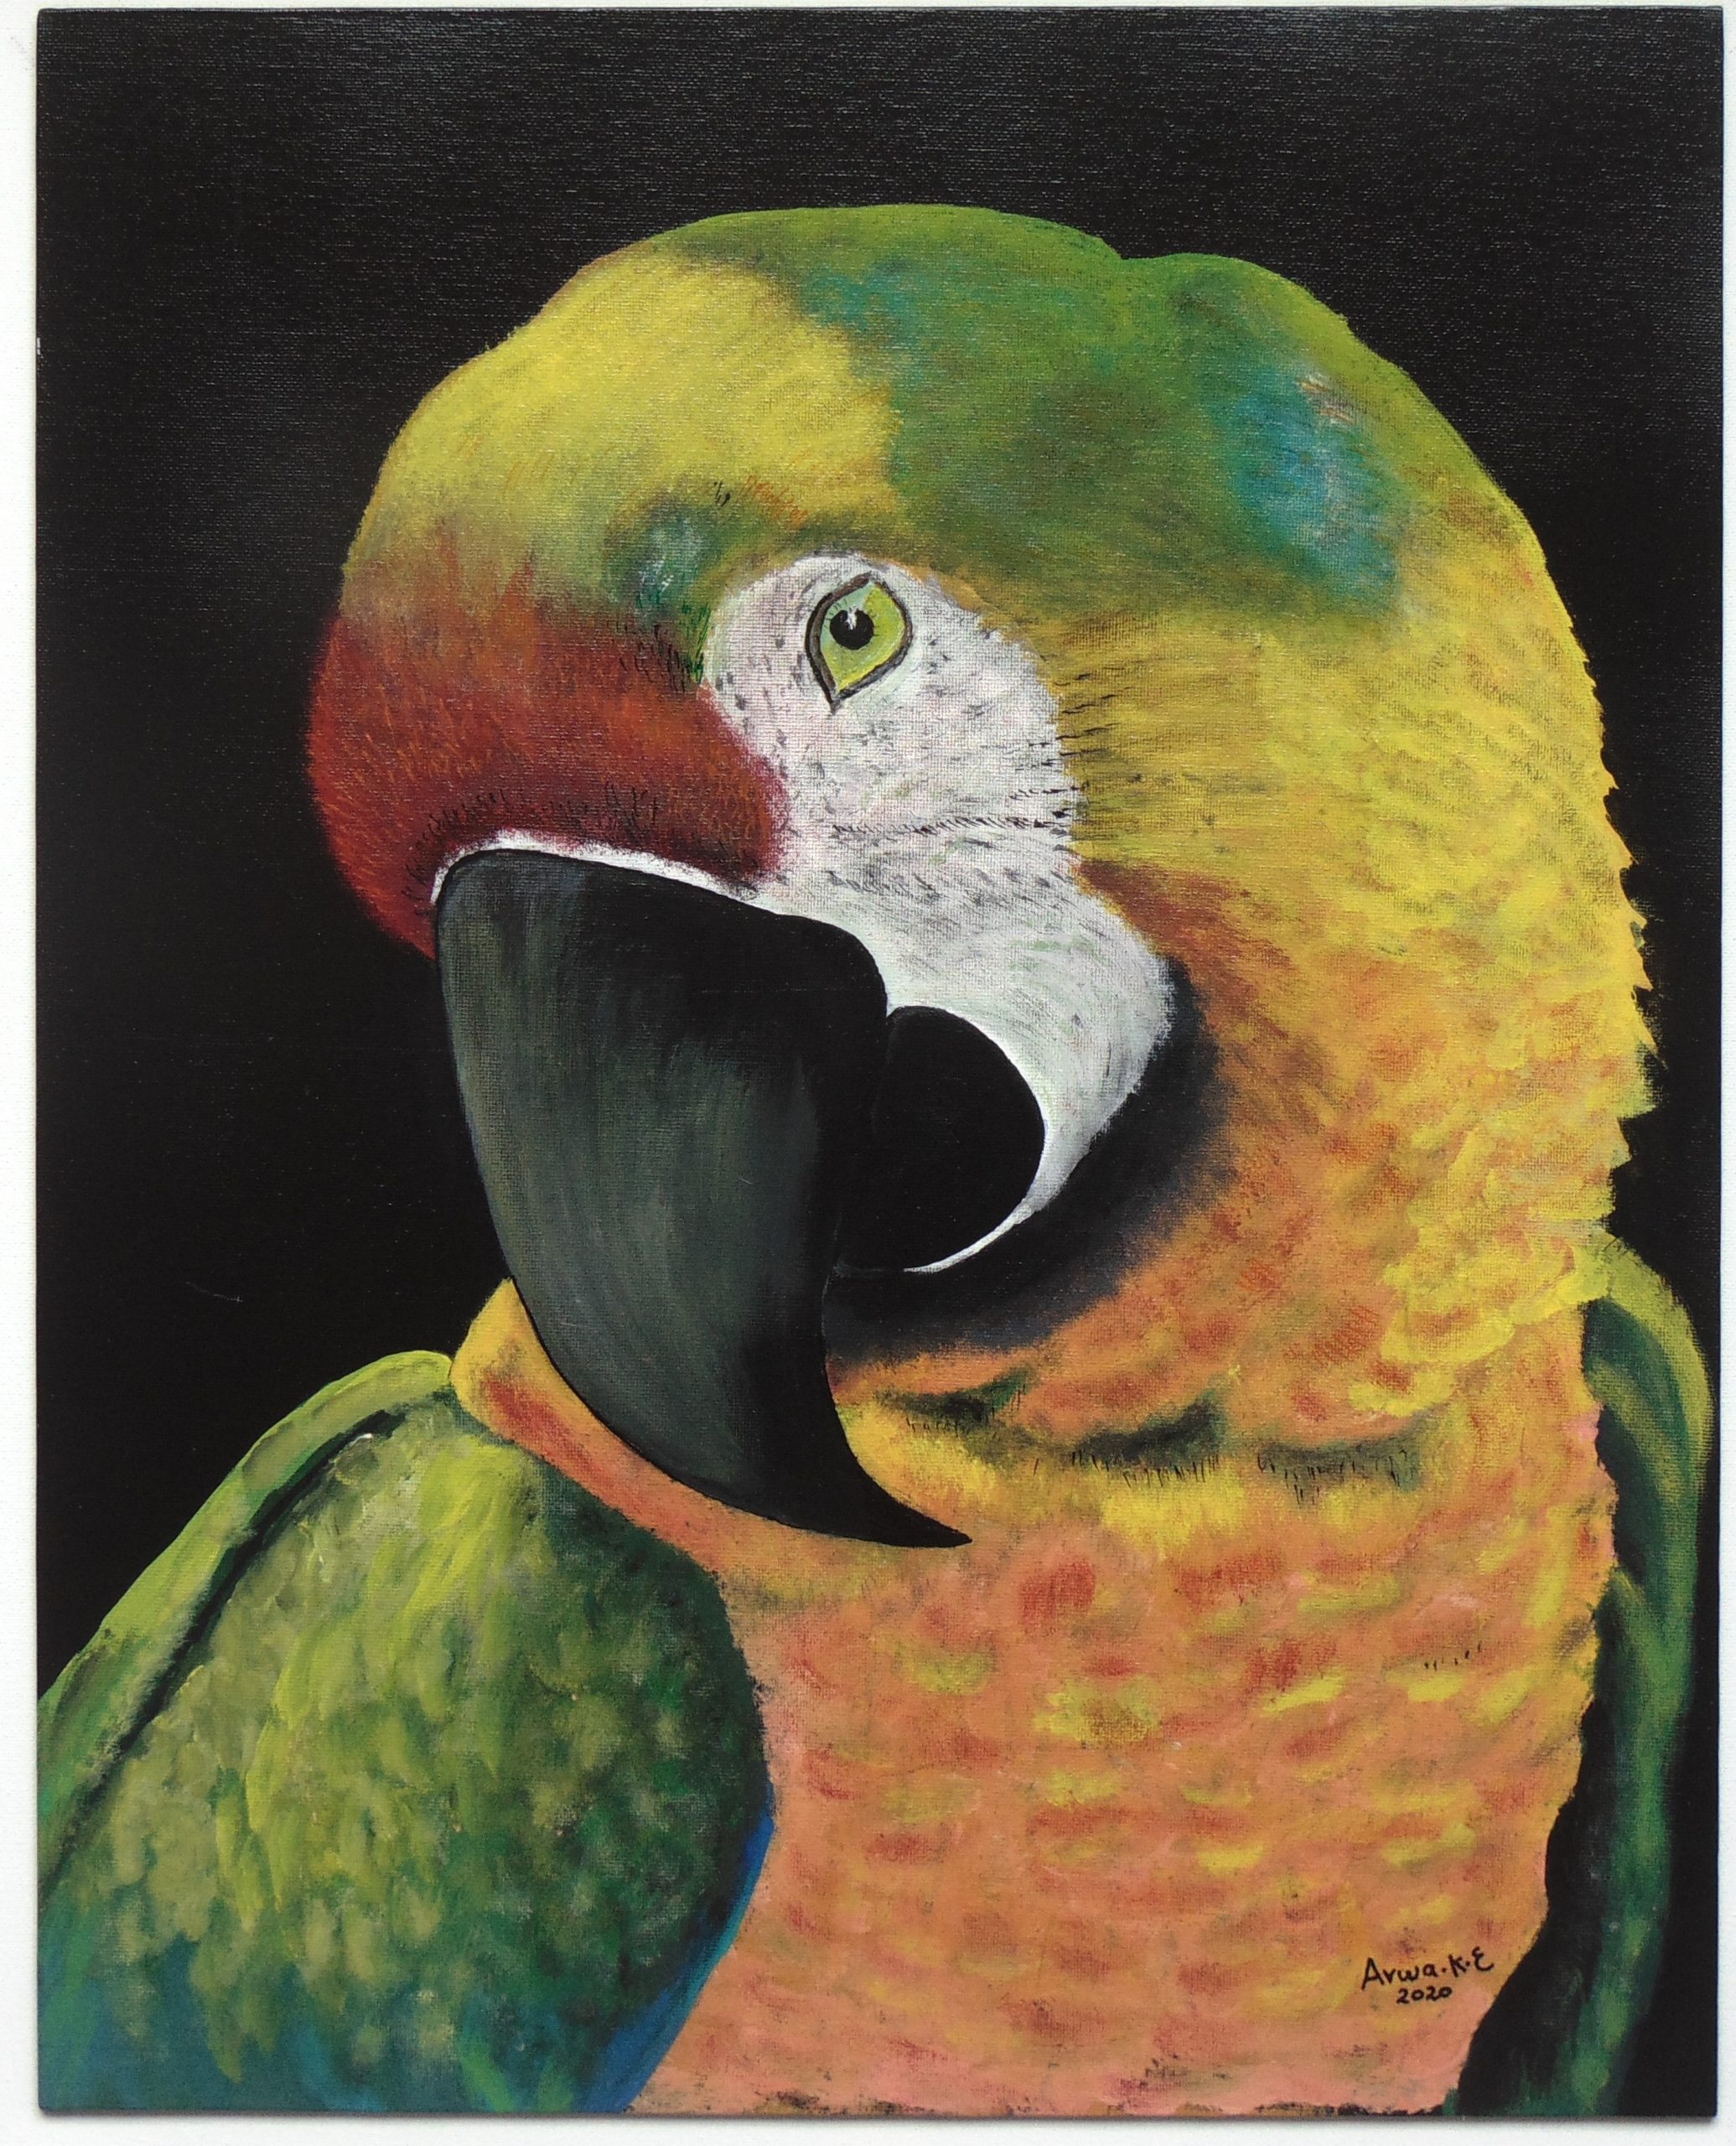 Painting of Happy Parrot by Arwa Khadr ElBoraei, Art exhibit at Brookside Gardens, Bird, Photograph, Beak, Organism, Parrot, Feather, Painting, Art